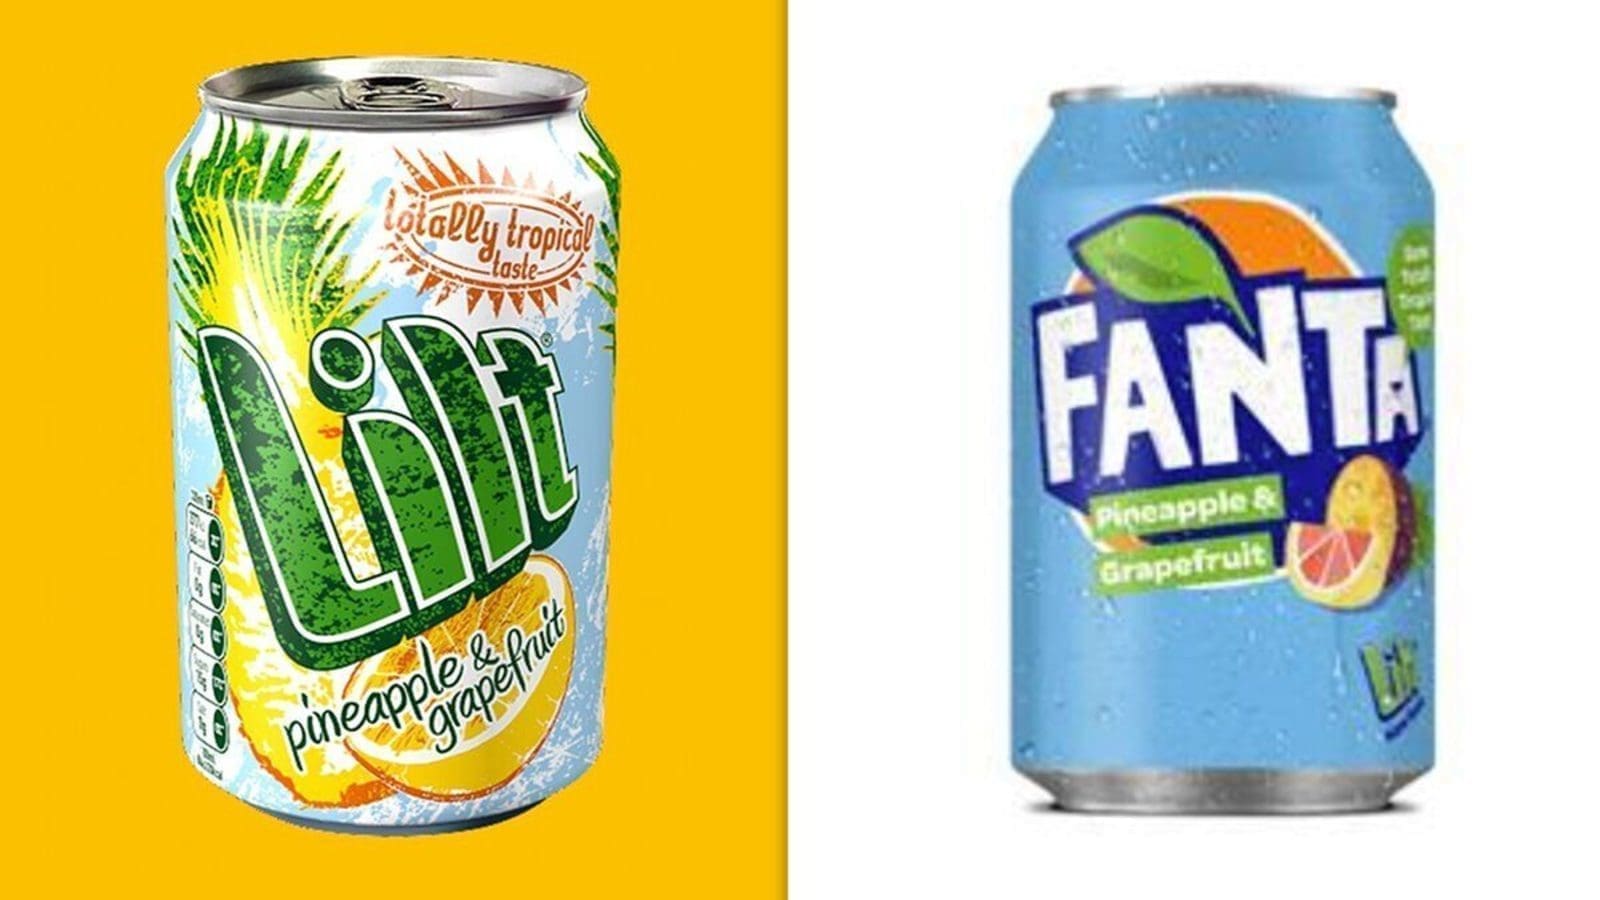 Coca-Cola rebrands Lilt drinks to Fanta Pineapple & Grapefruit